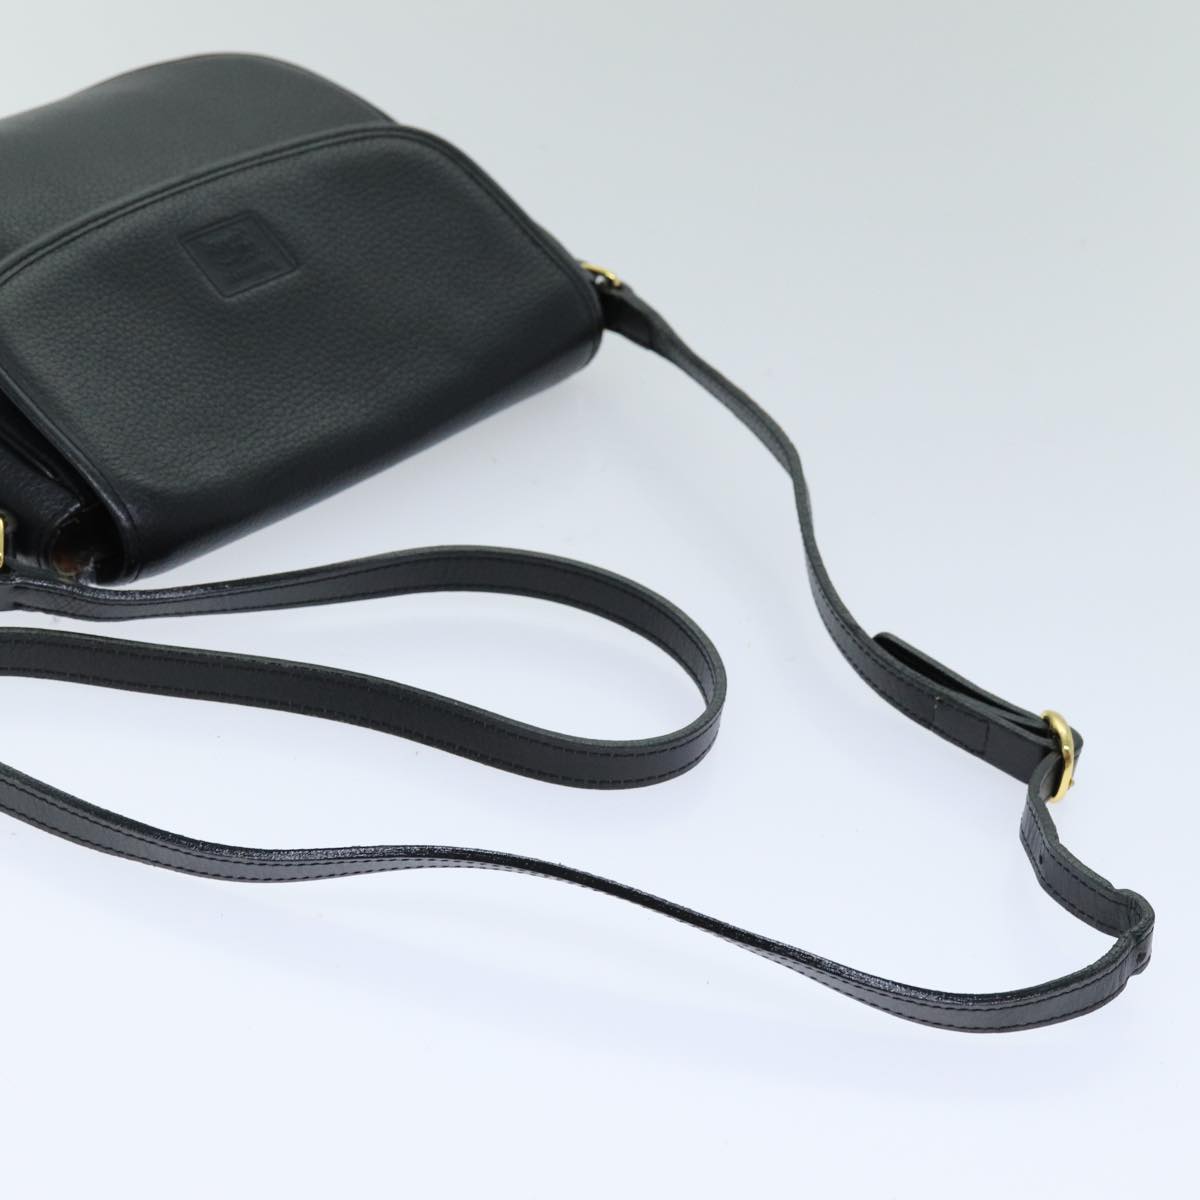 Burberrys Shoulder Bag Leather Black Auth bs14366